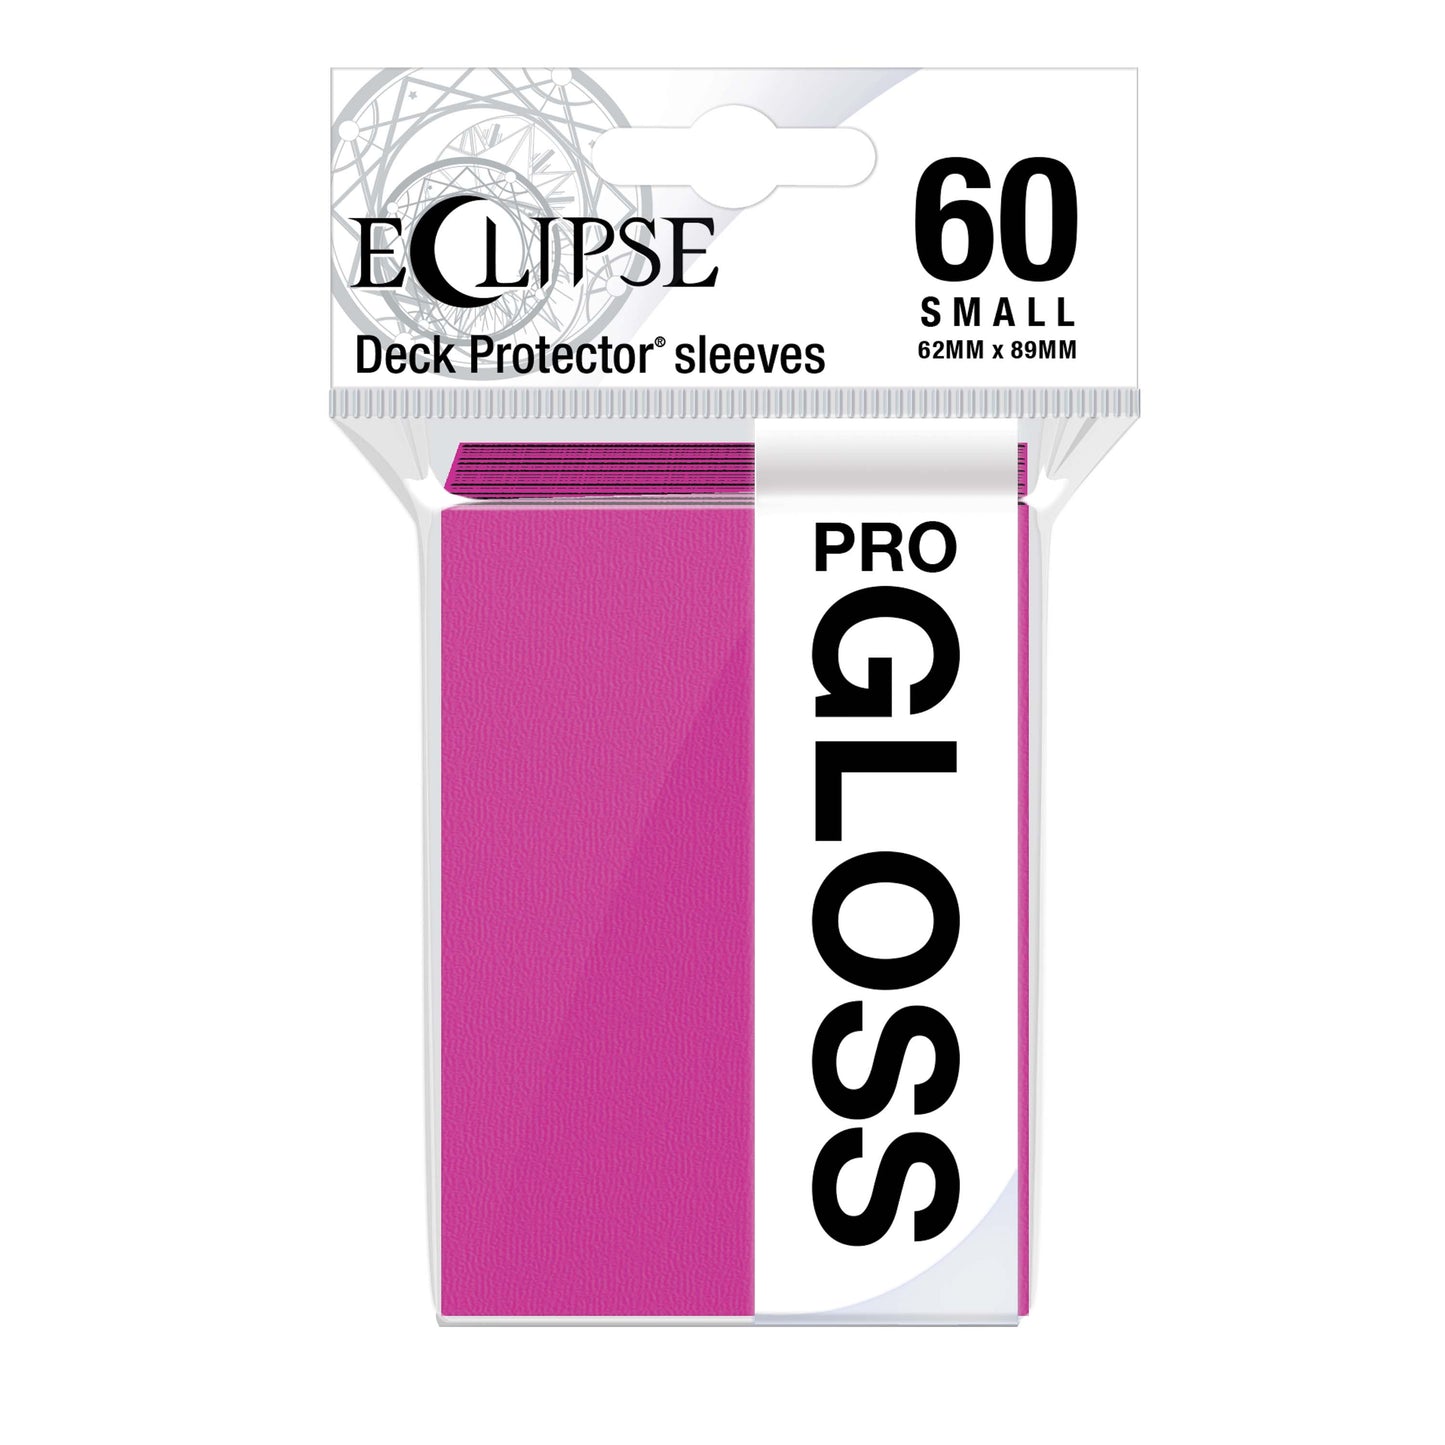 Ultra PRO Card Protectors Eclipse Small Pro-Gloss (60)